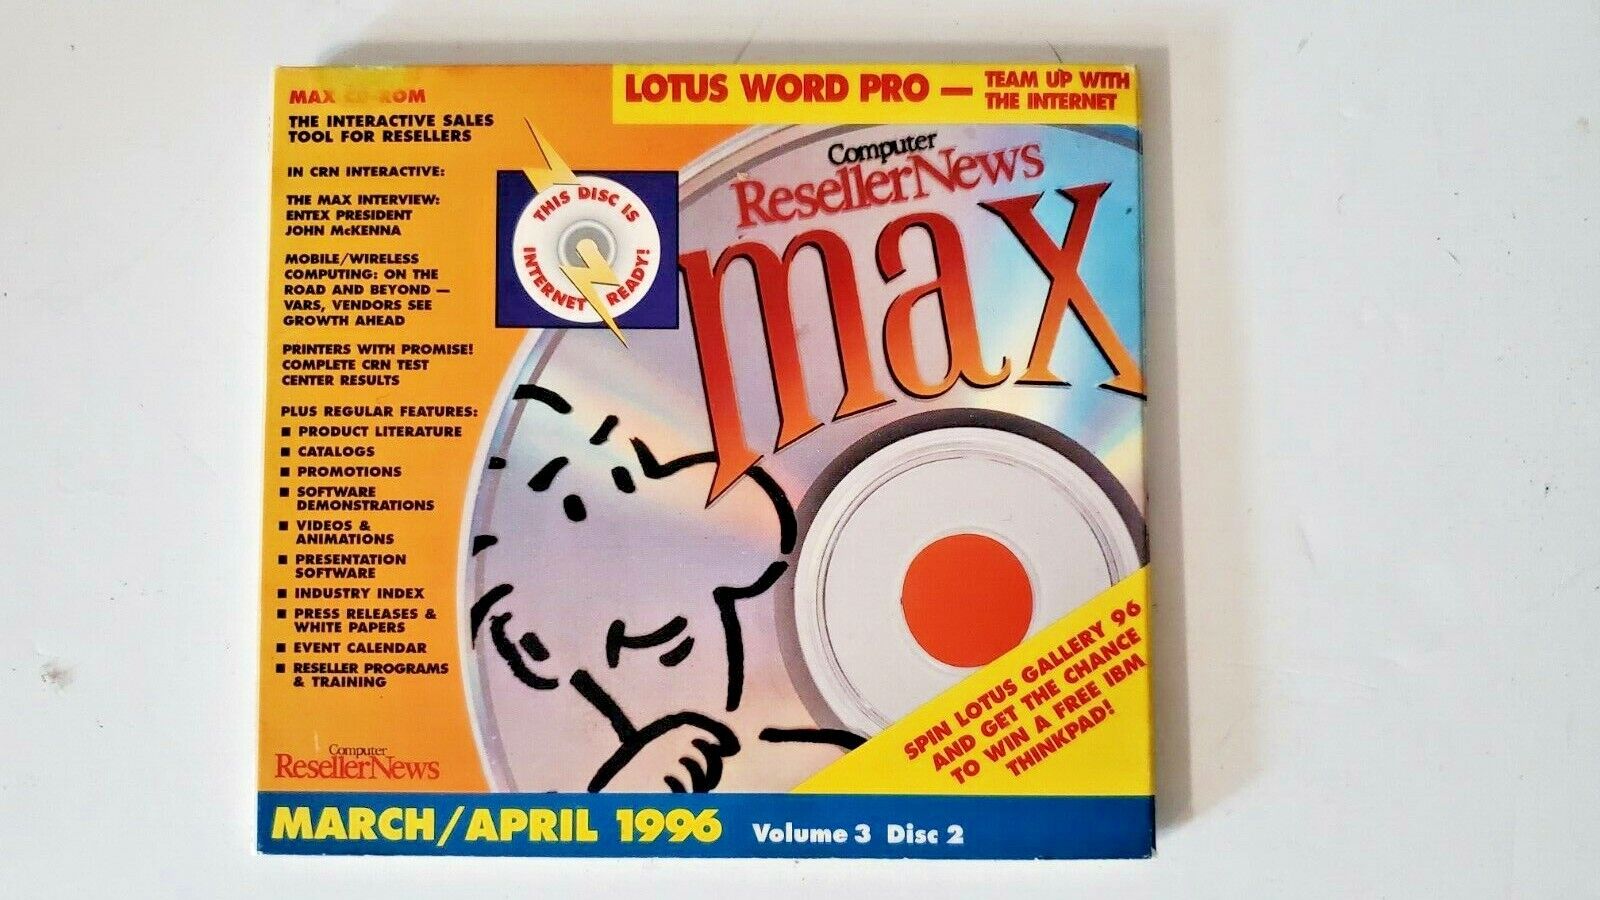 Vintage Software CD - Computer Reseller News Max 1996 sales tools - pre Internet